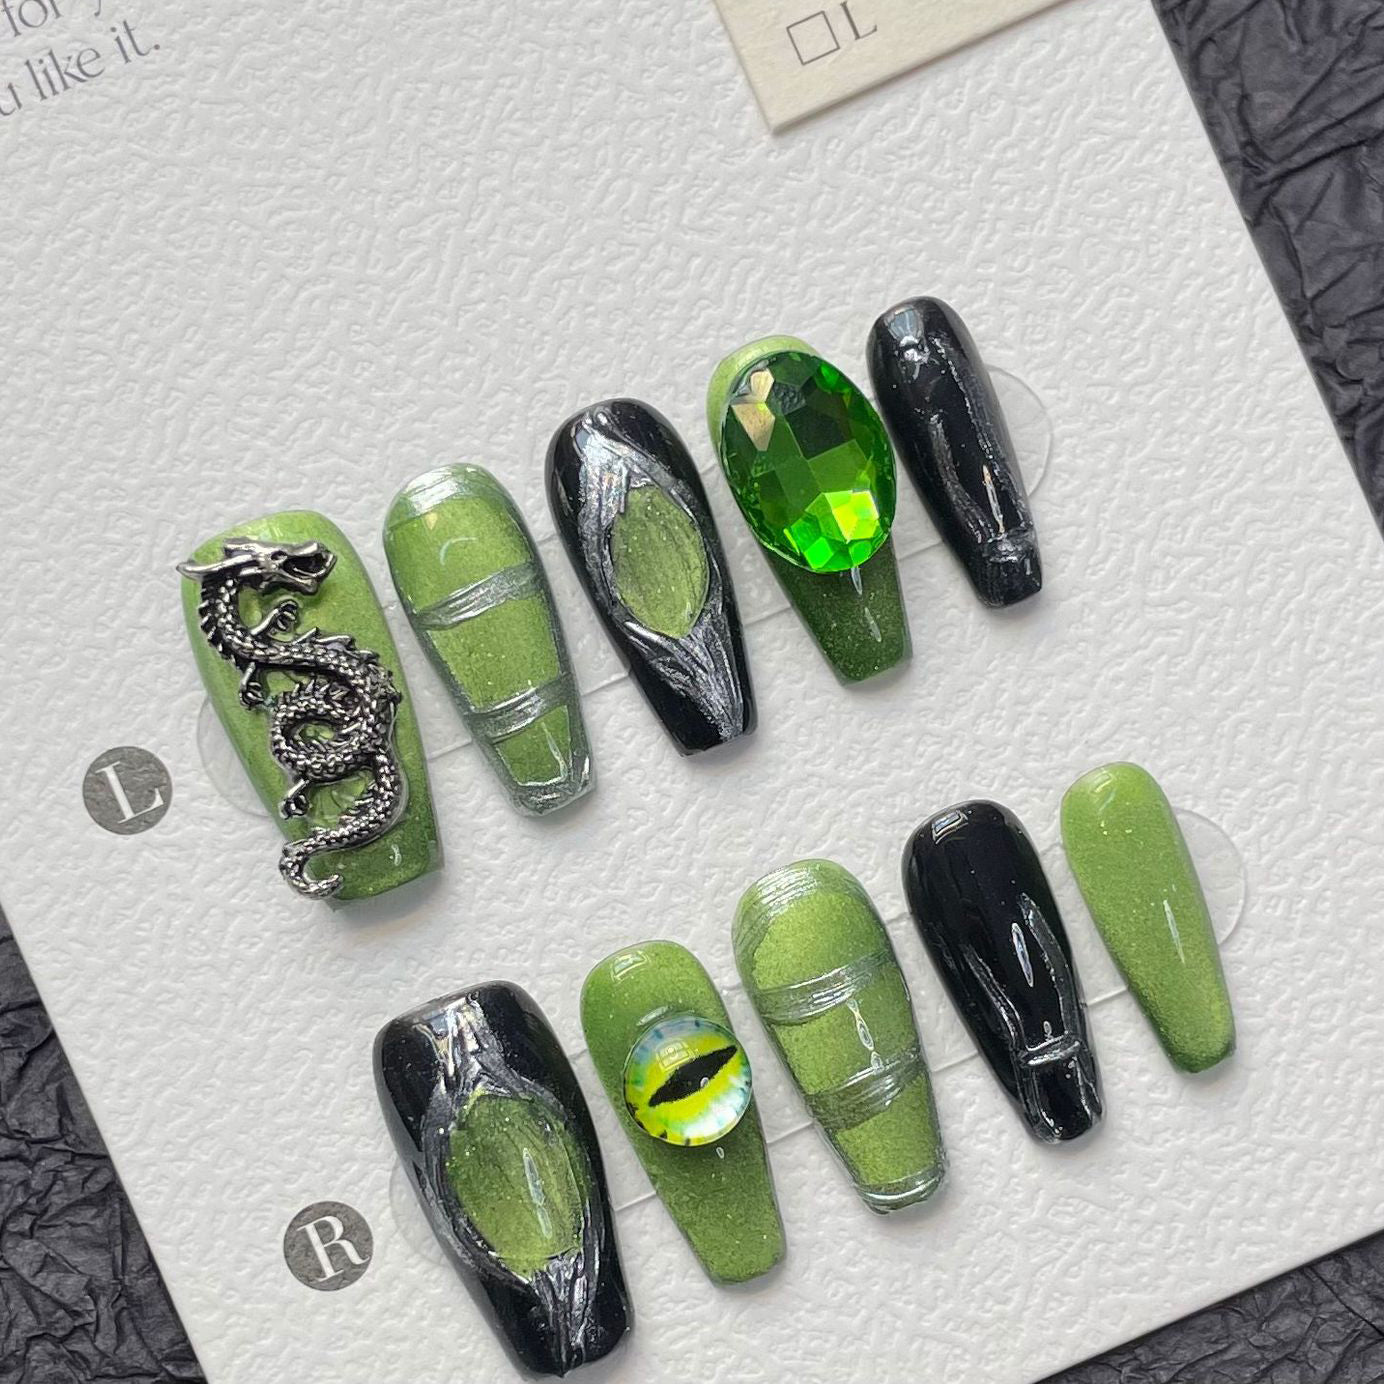 1291 Green Cat's Eye style press on nails 100% handmade false nails green